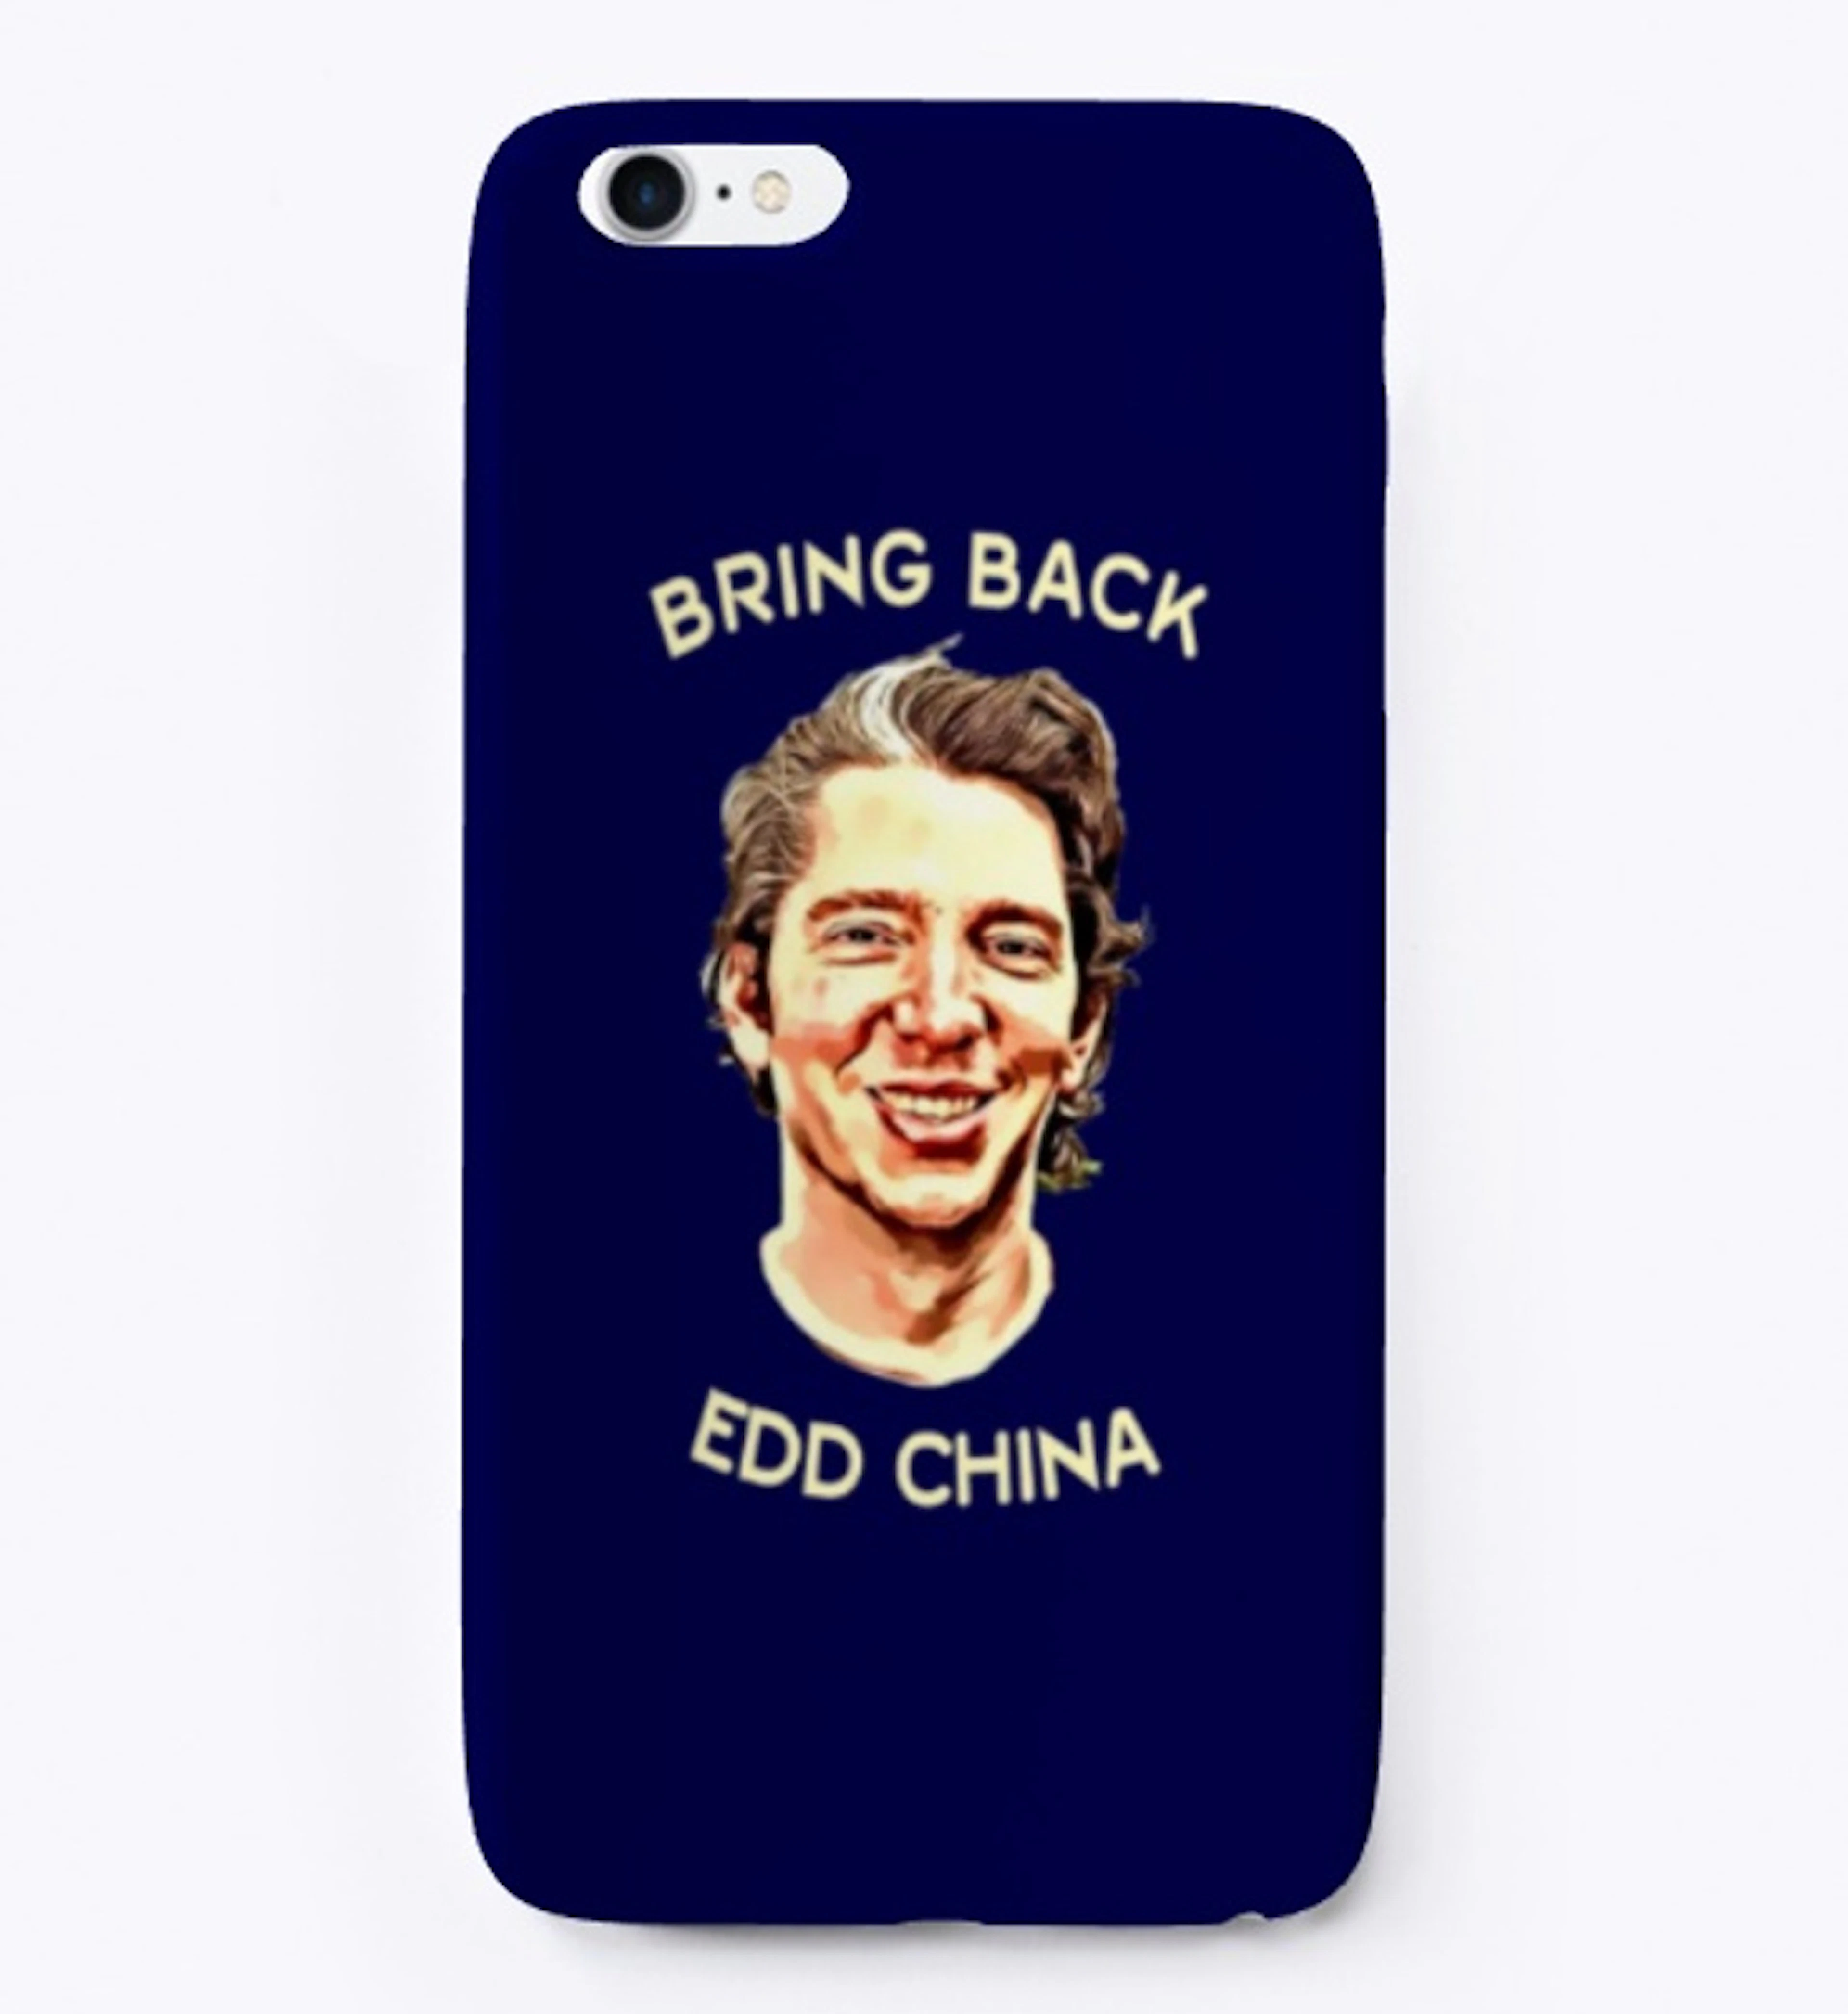 Bring Back Edd China in Wheeler Dealers